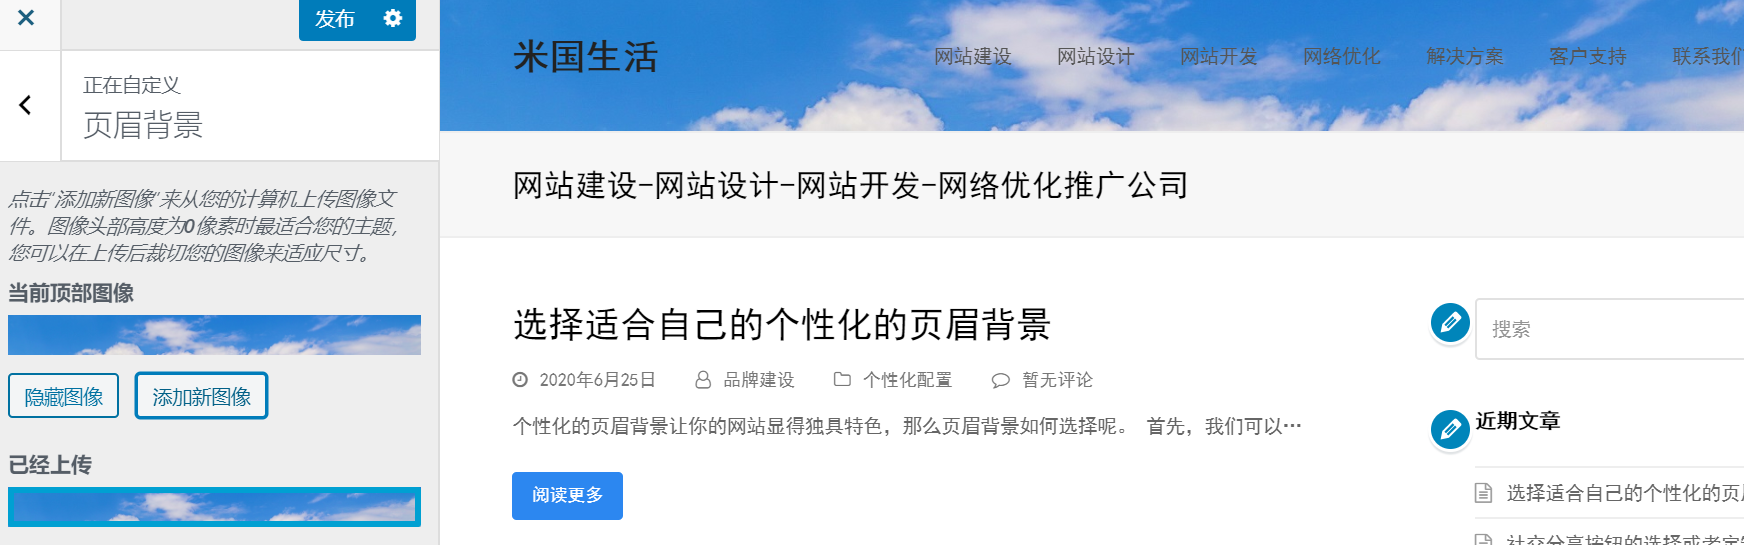 Website header background modification-brand-SEO-public opinion-optimization-米国生活